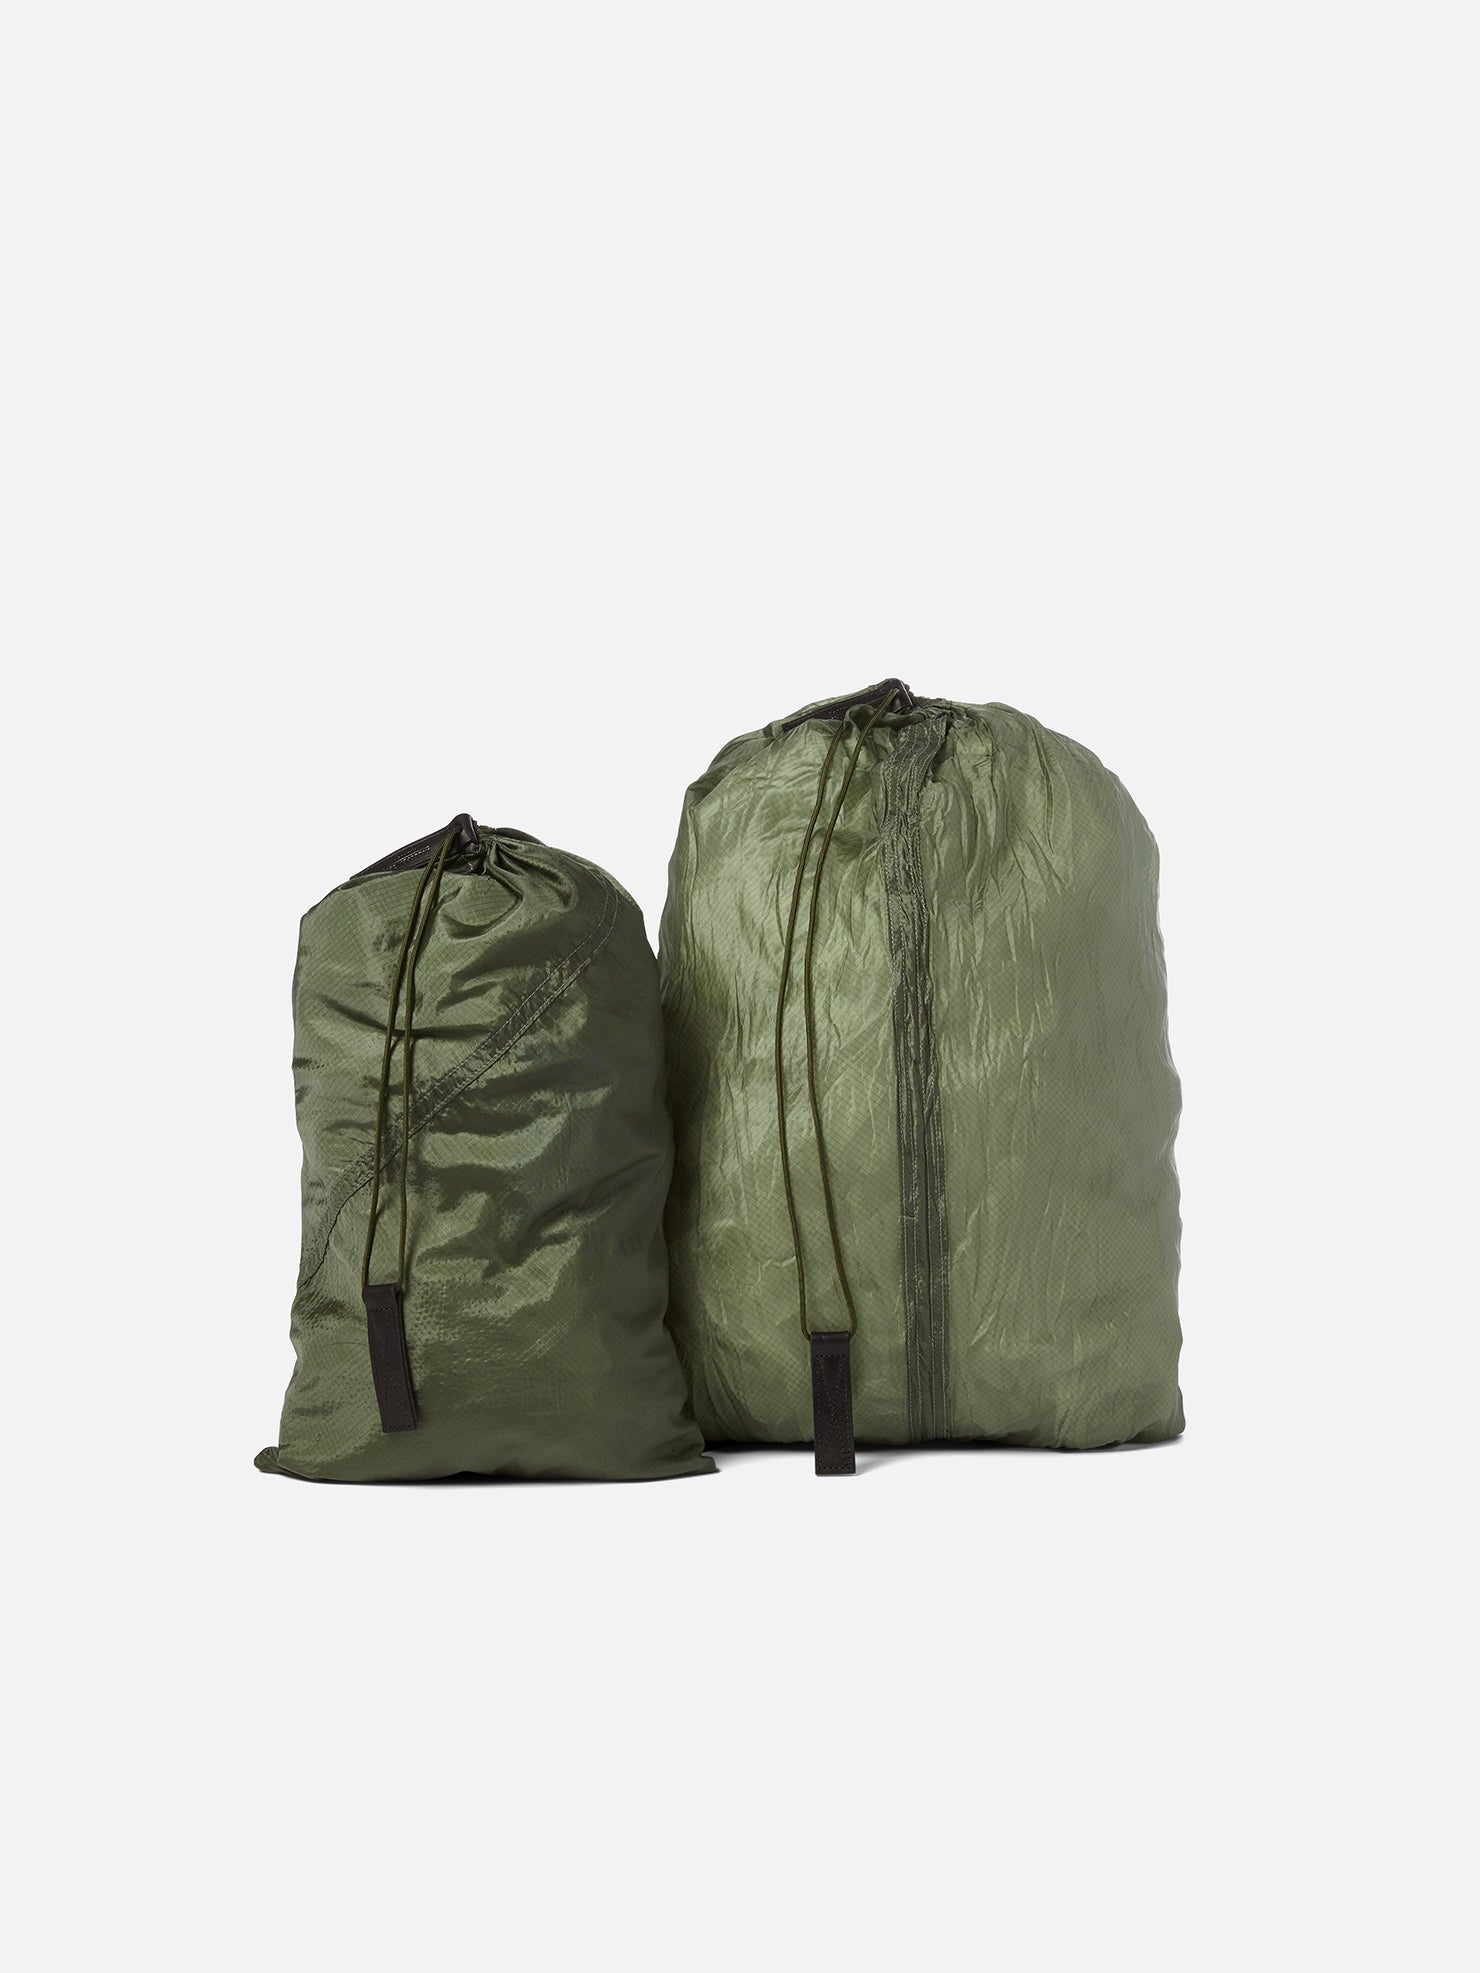 Marine Corps Bags, Backpacks & Duffel Bags